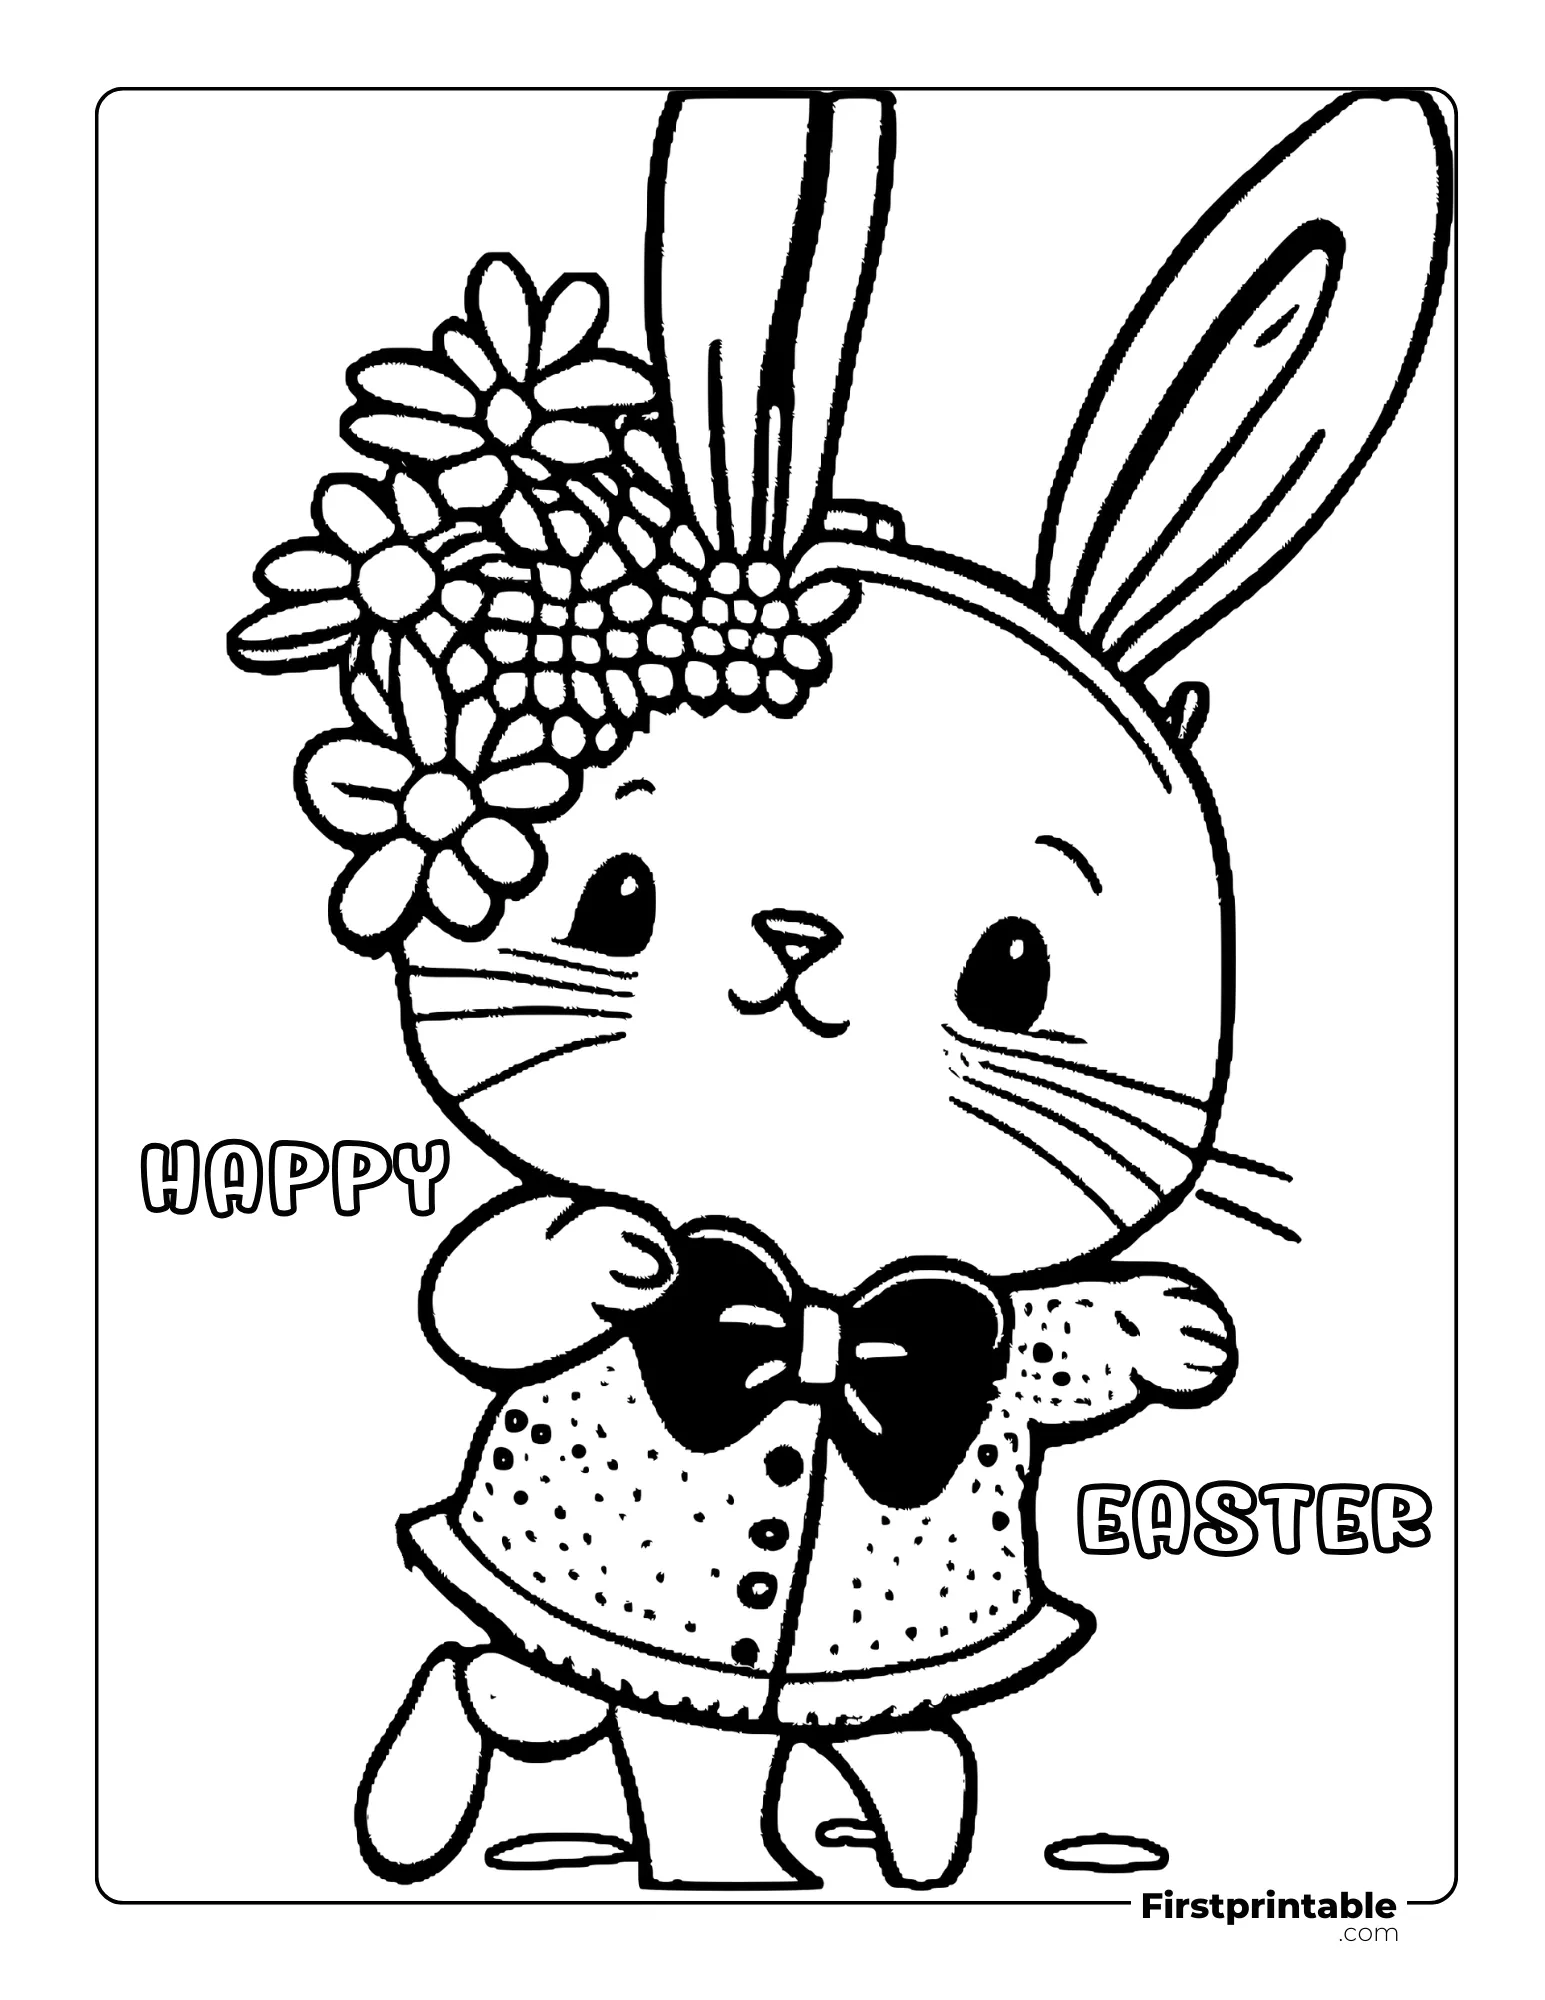 Cute bunny coloring page